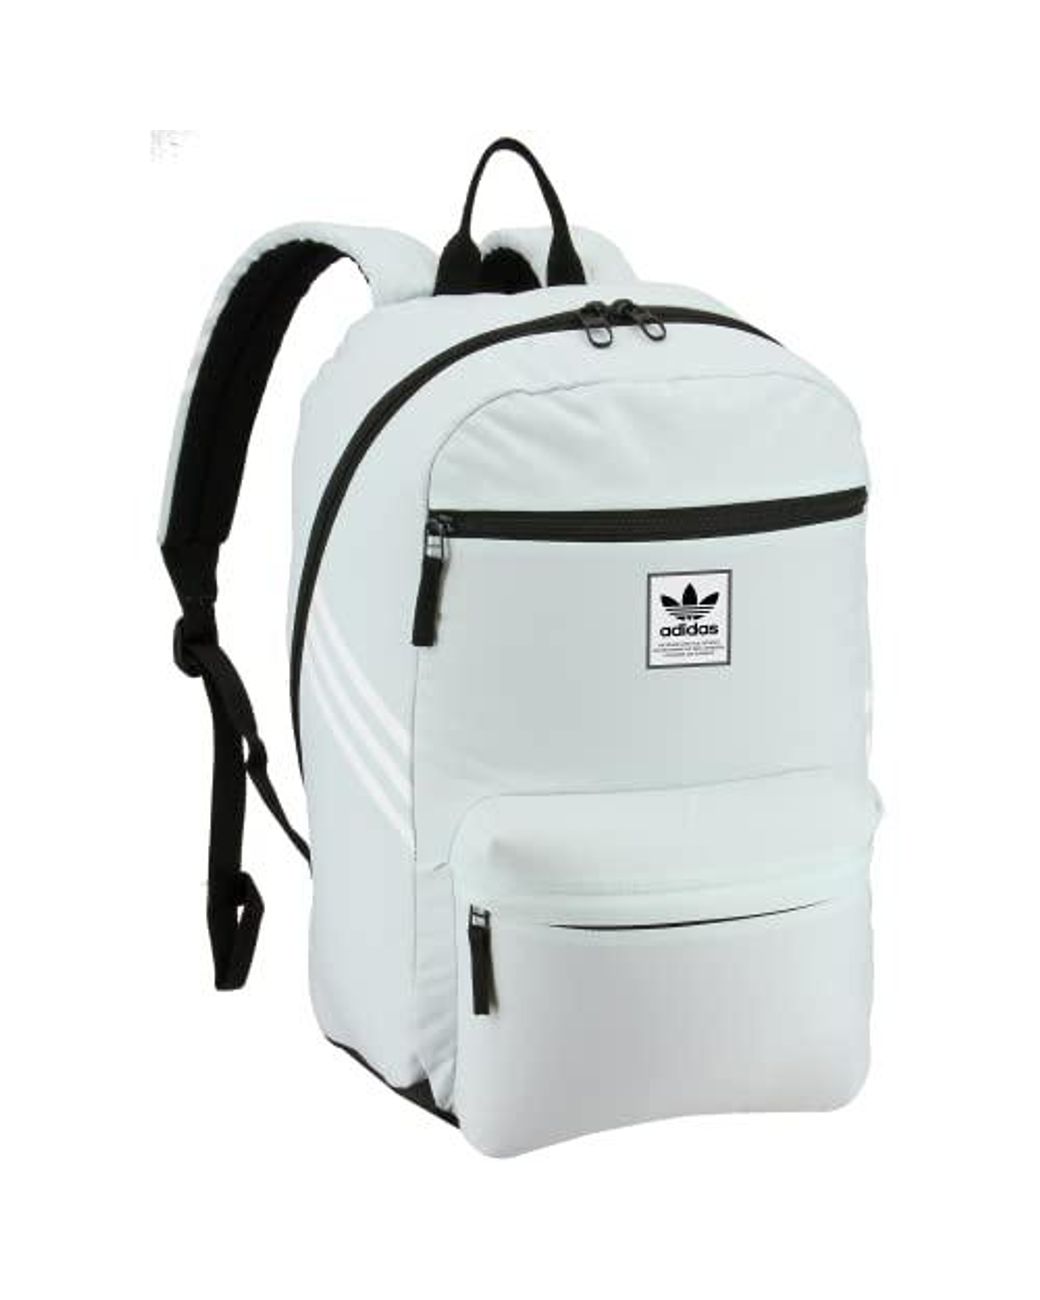 adidas Originals Originals National Sst Backpack in White | Lyst